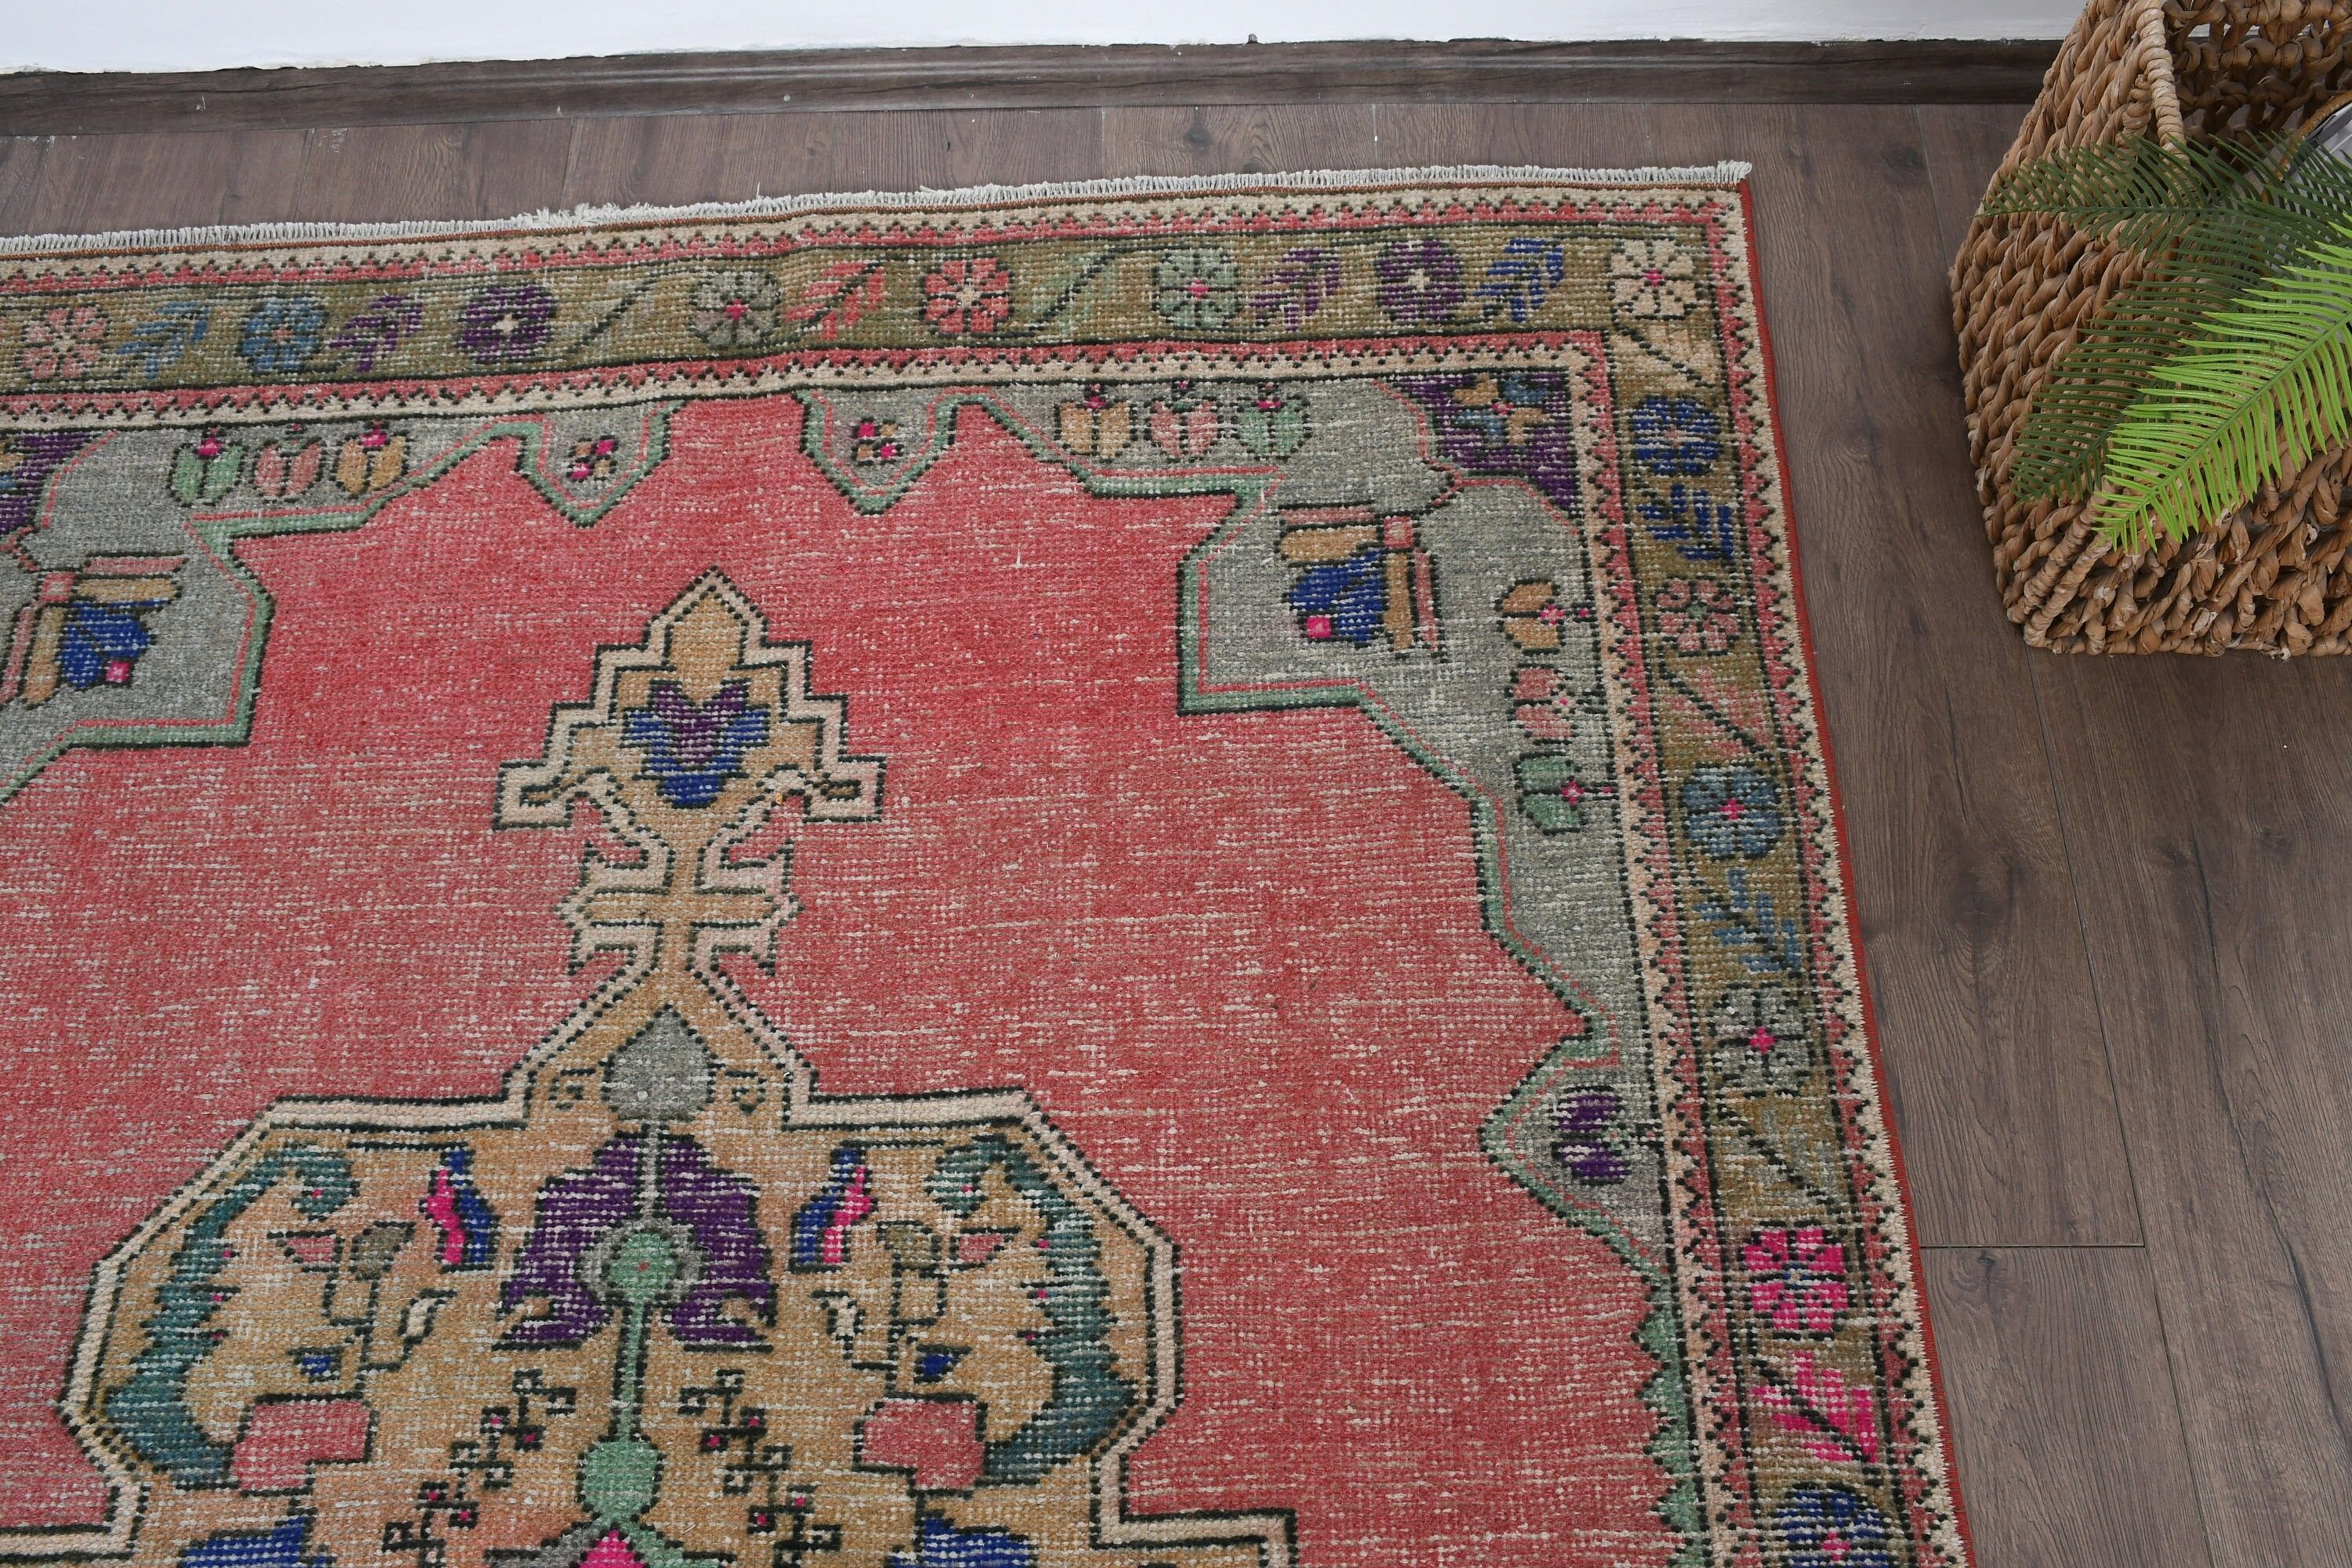 Salon Rug, Pink Moroccan Rugs, Vintage Rug, Home Decor Rug, Turkish Rugs, Office Rug, Living Room Rugs, Floor Rug, 4.7x8.8 ft Large Rug